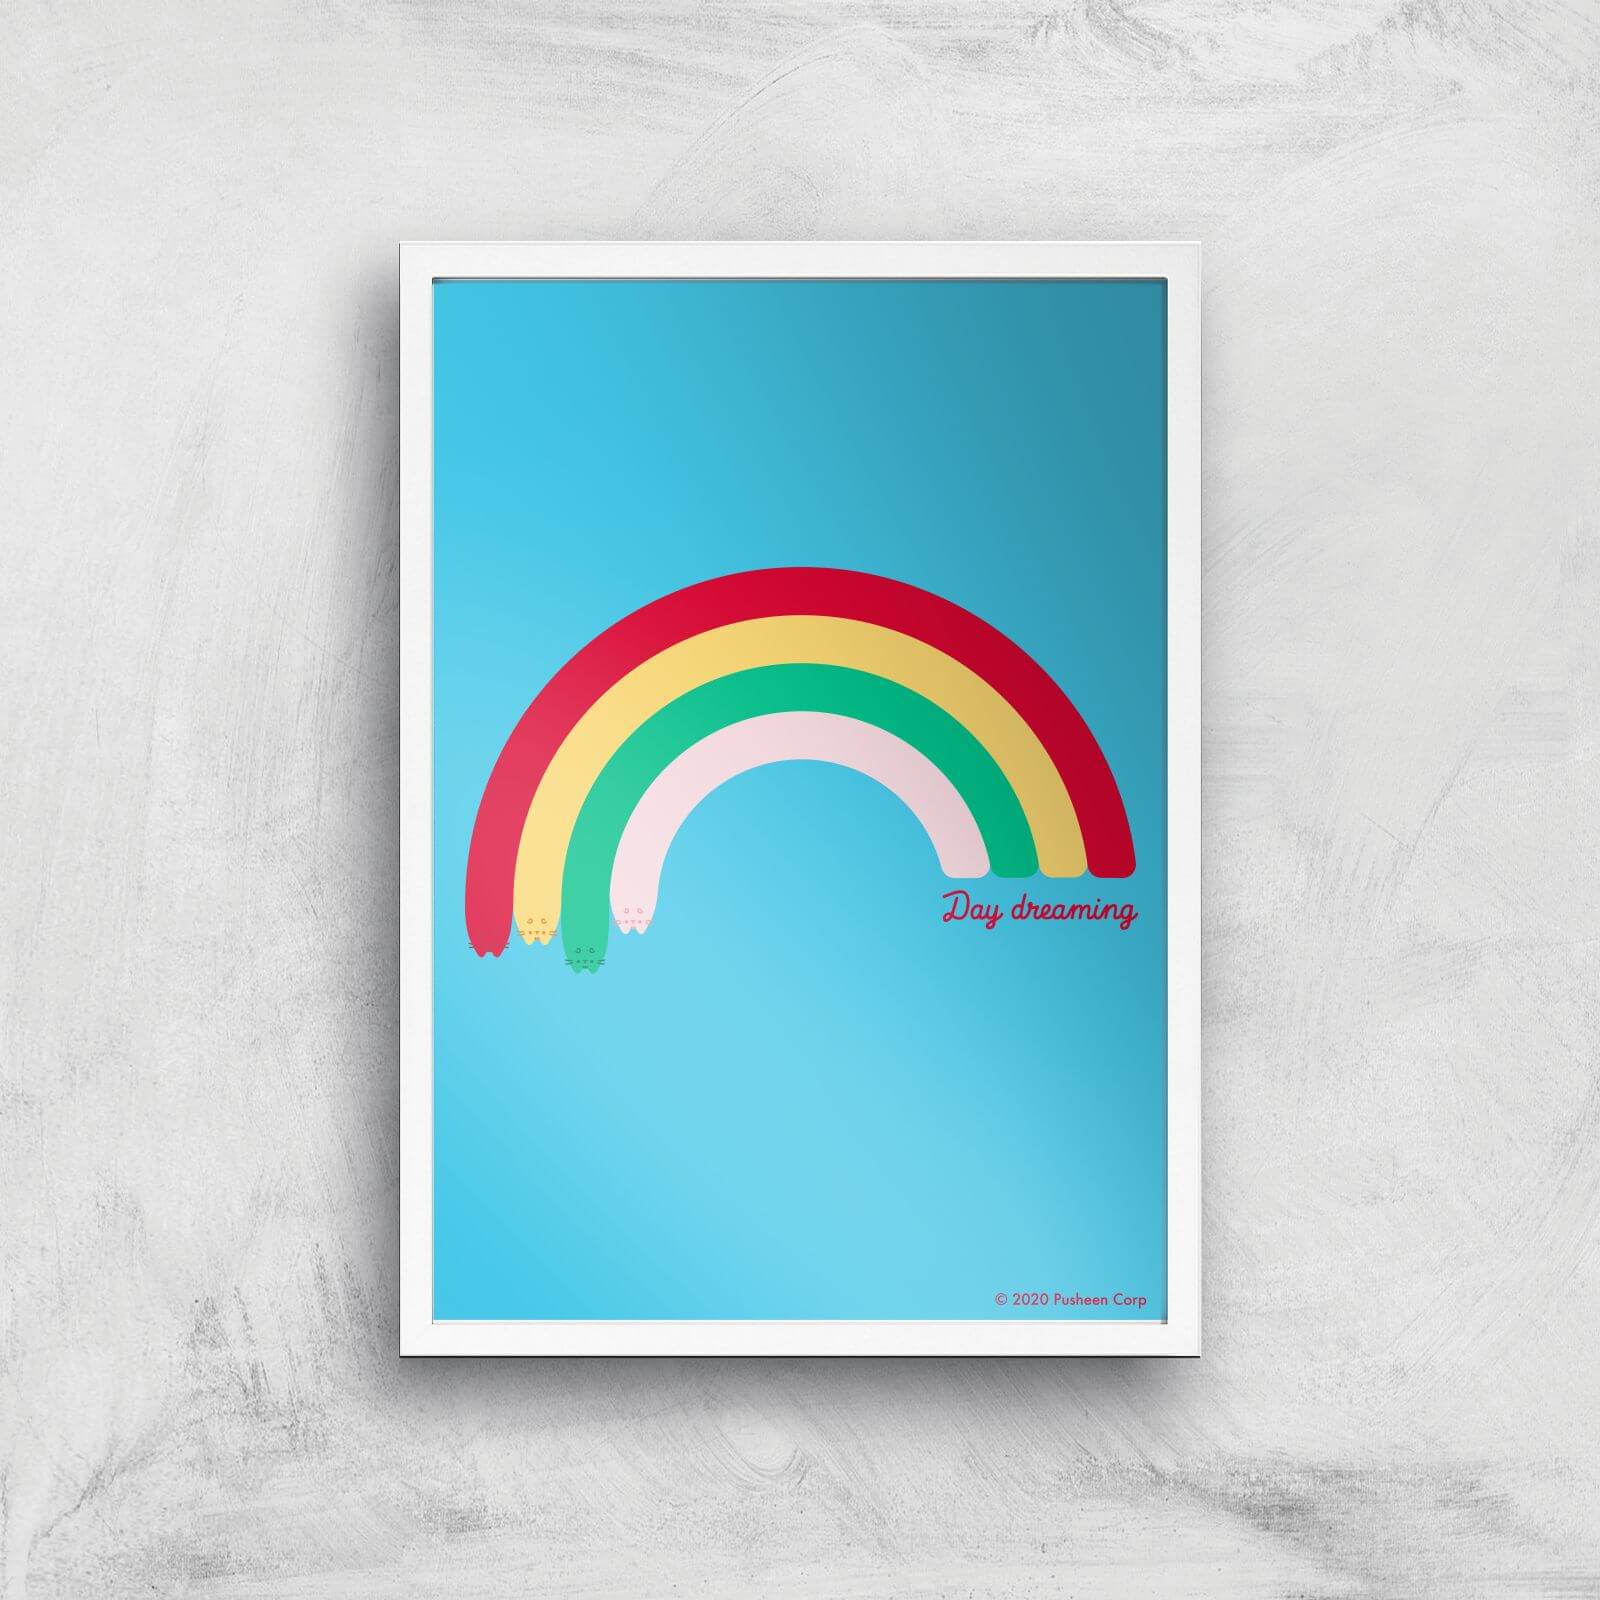 Pusheen Large Rainbow Giclee Art Print - A3 - White Frame